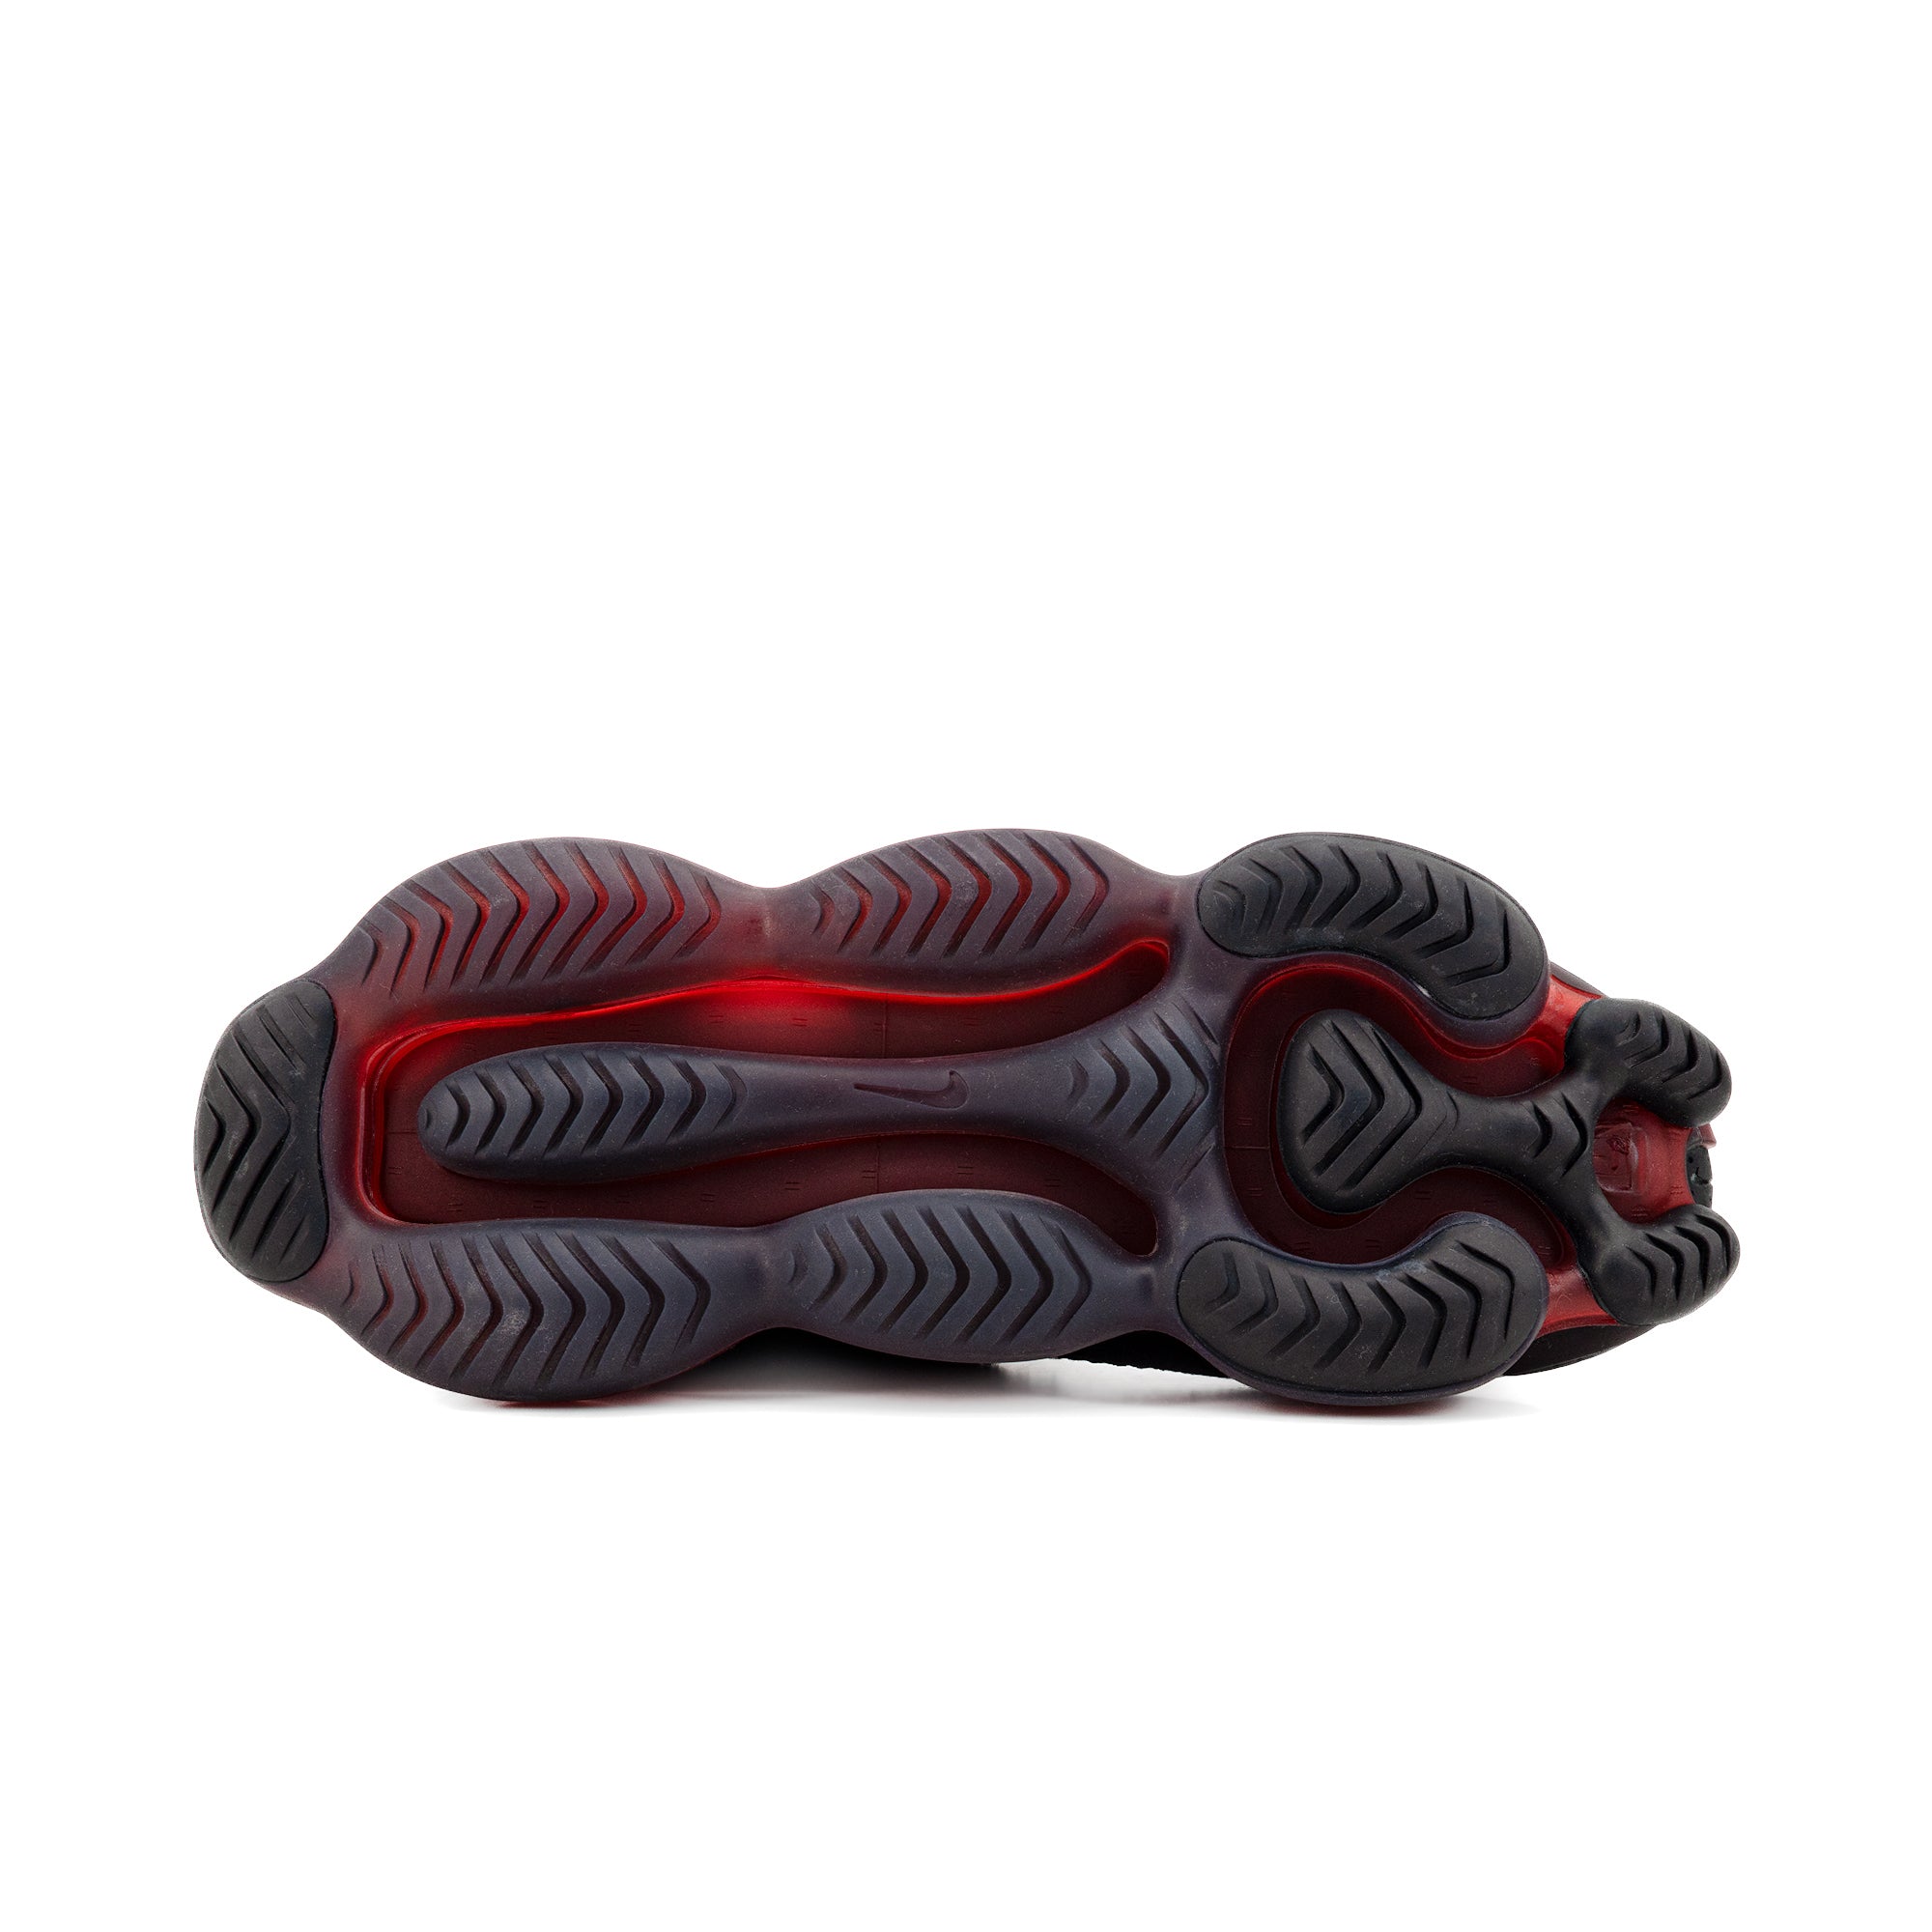 HealthdesignShops, Black cycle Nike Air Max Scorpion